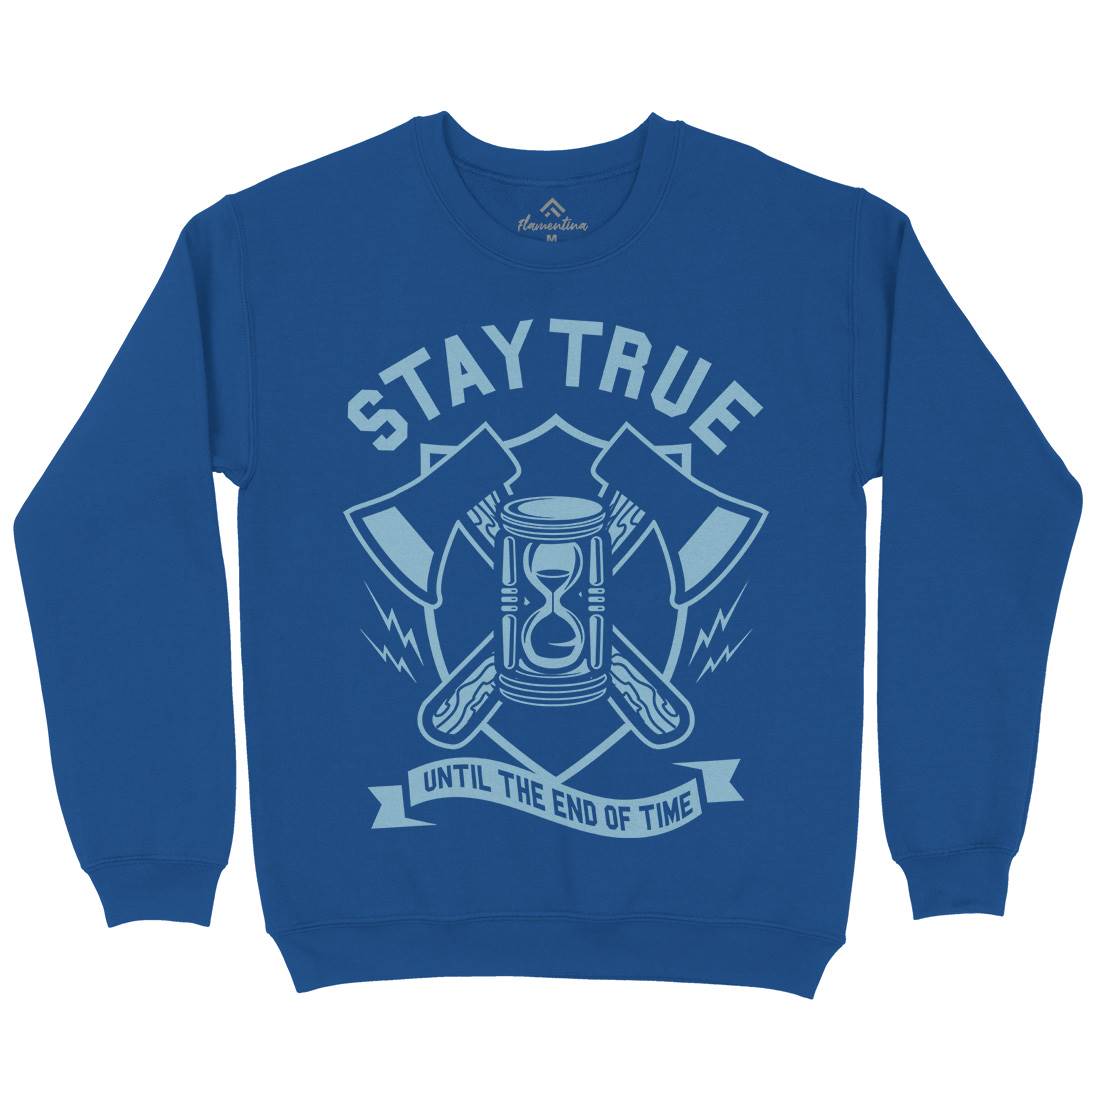 Stay True Kids Crew Neck Sweatshirt Quotes A285